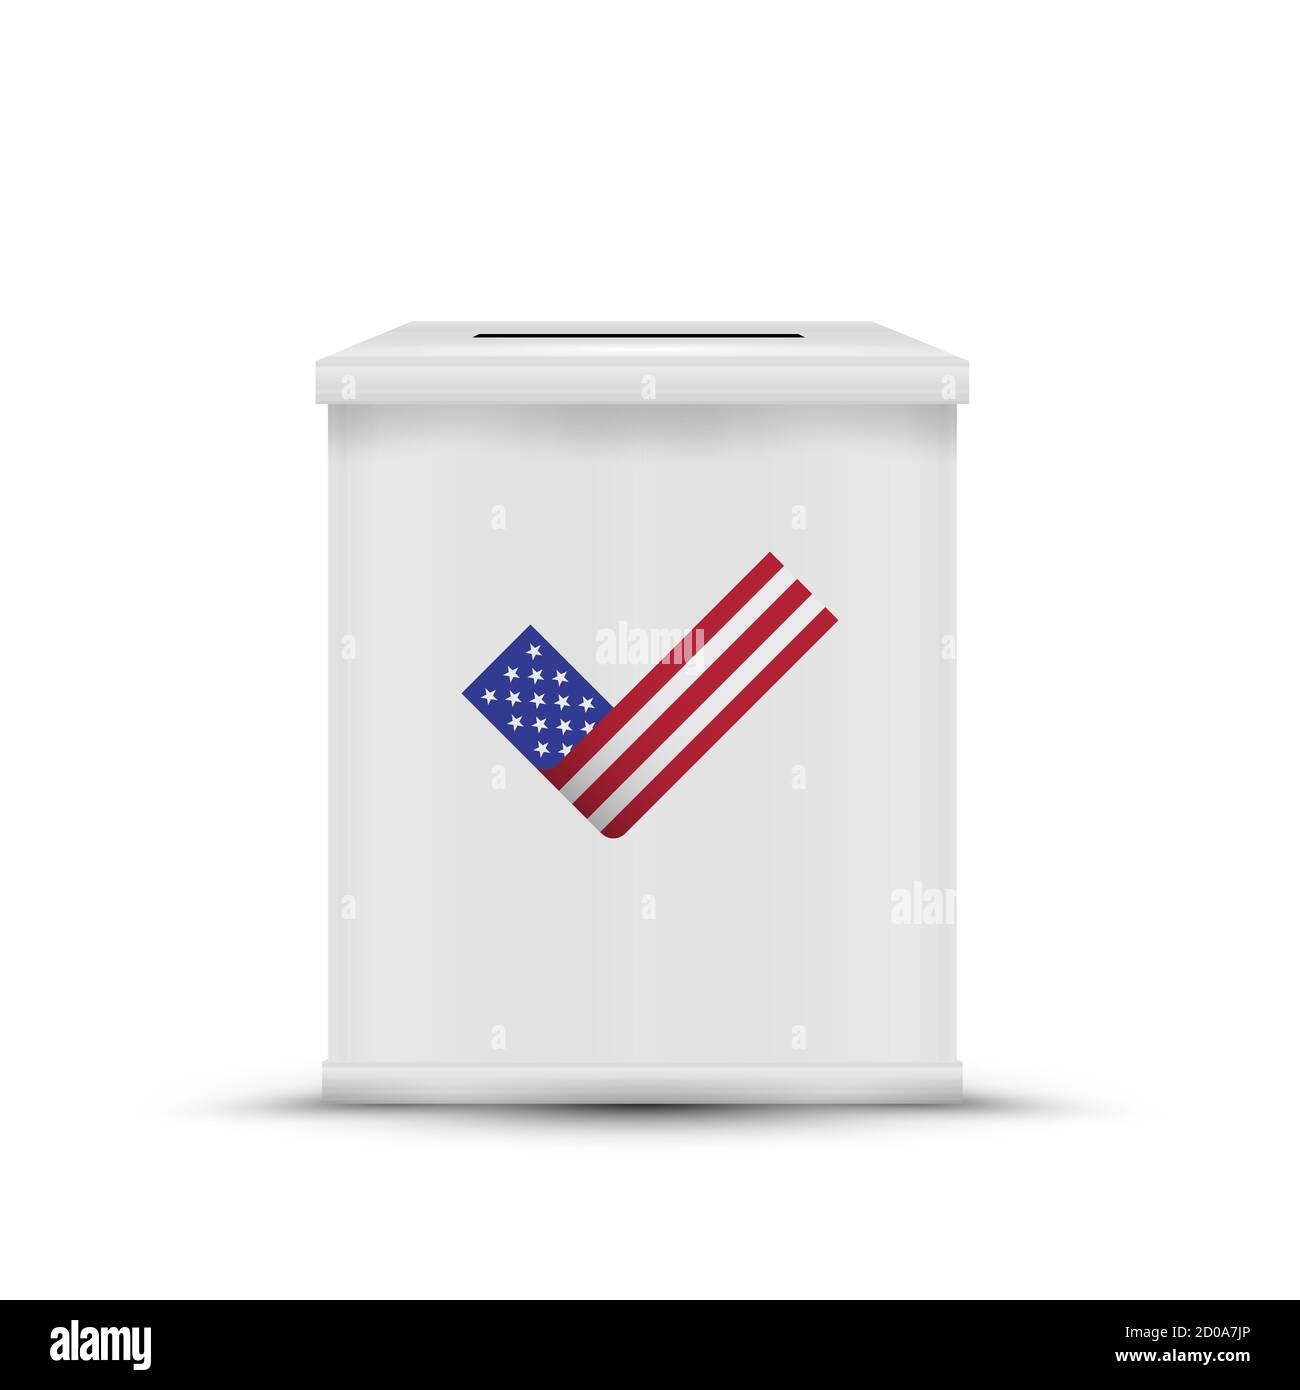 White ballot box isolated. American flag check mark. 2020 United States presidential election. illustration. Stock Photo